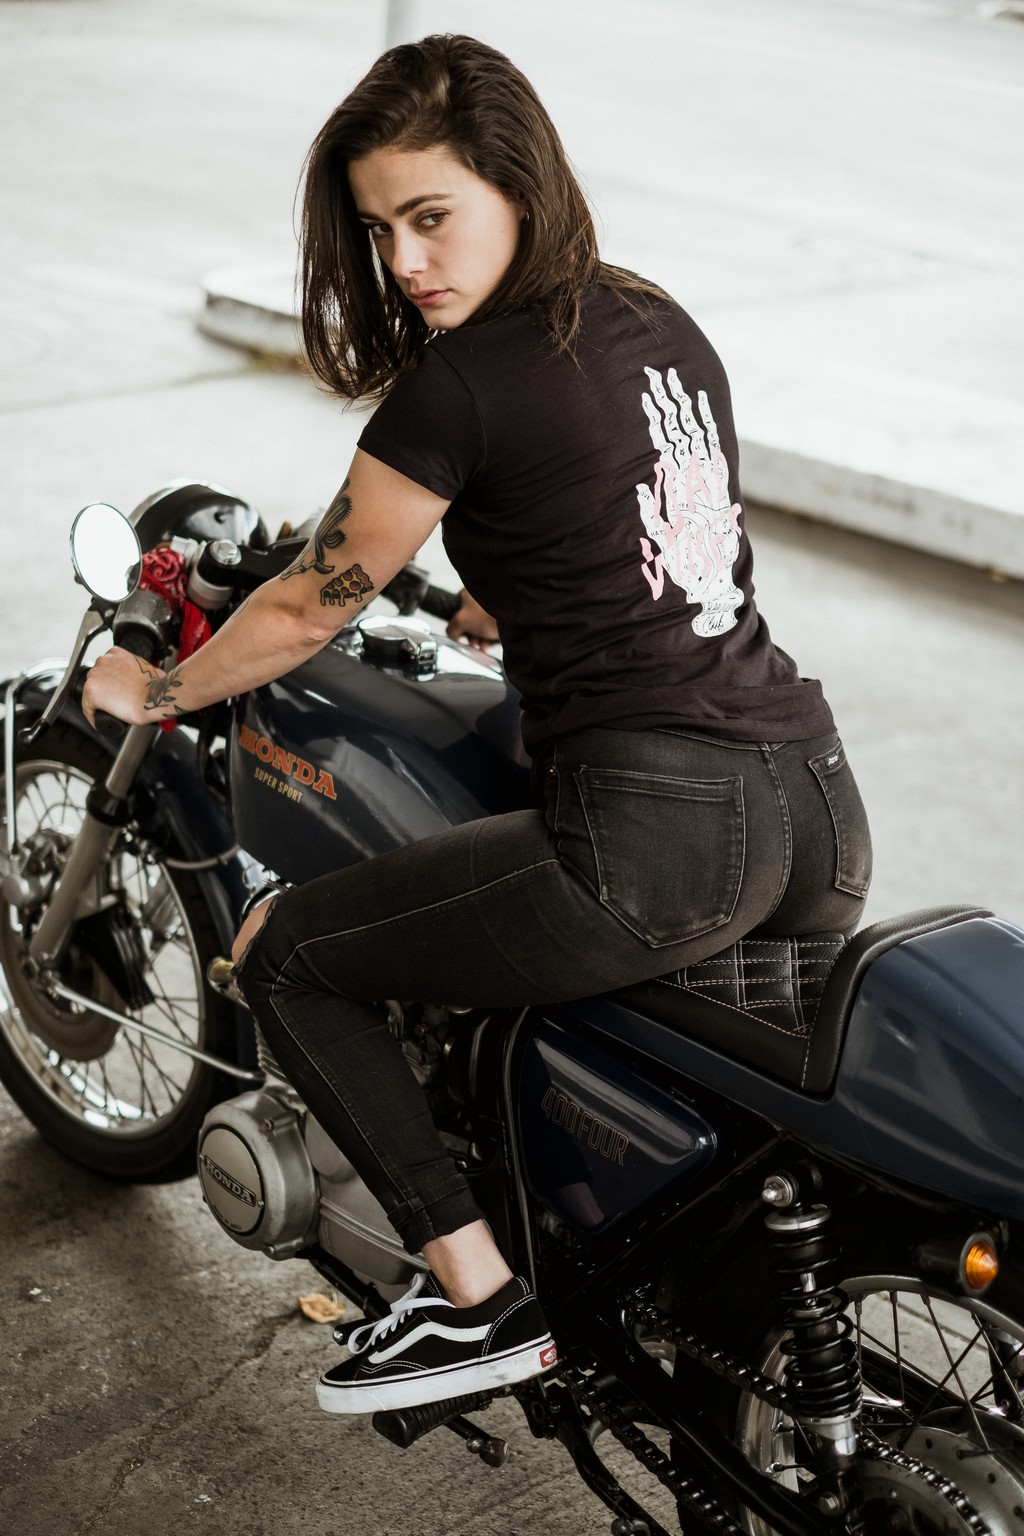 katie Abdilla on her 1976 Honda CB400F Motorcycle in Tasmania